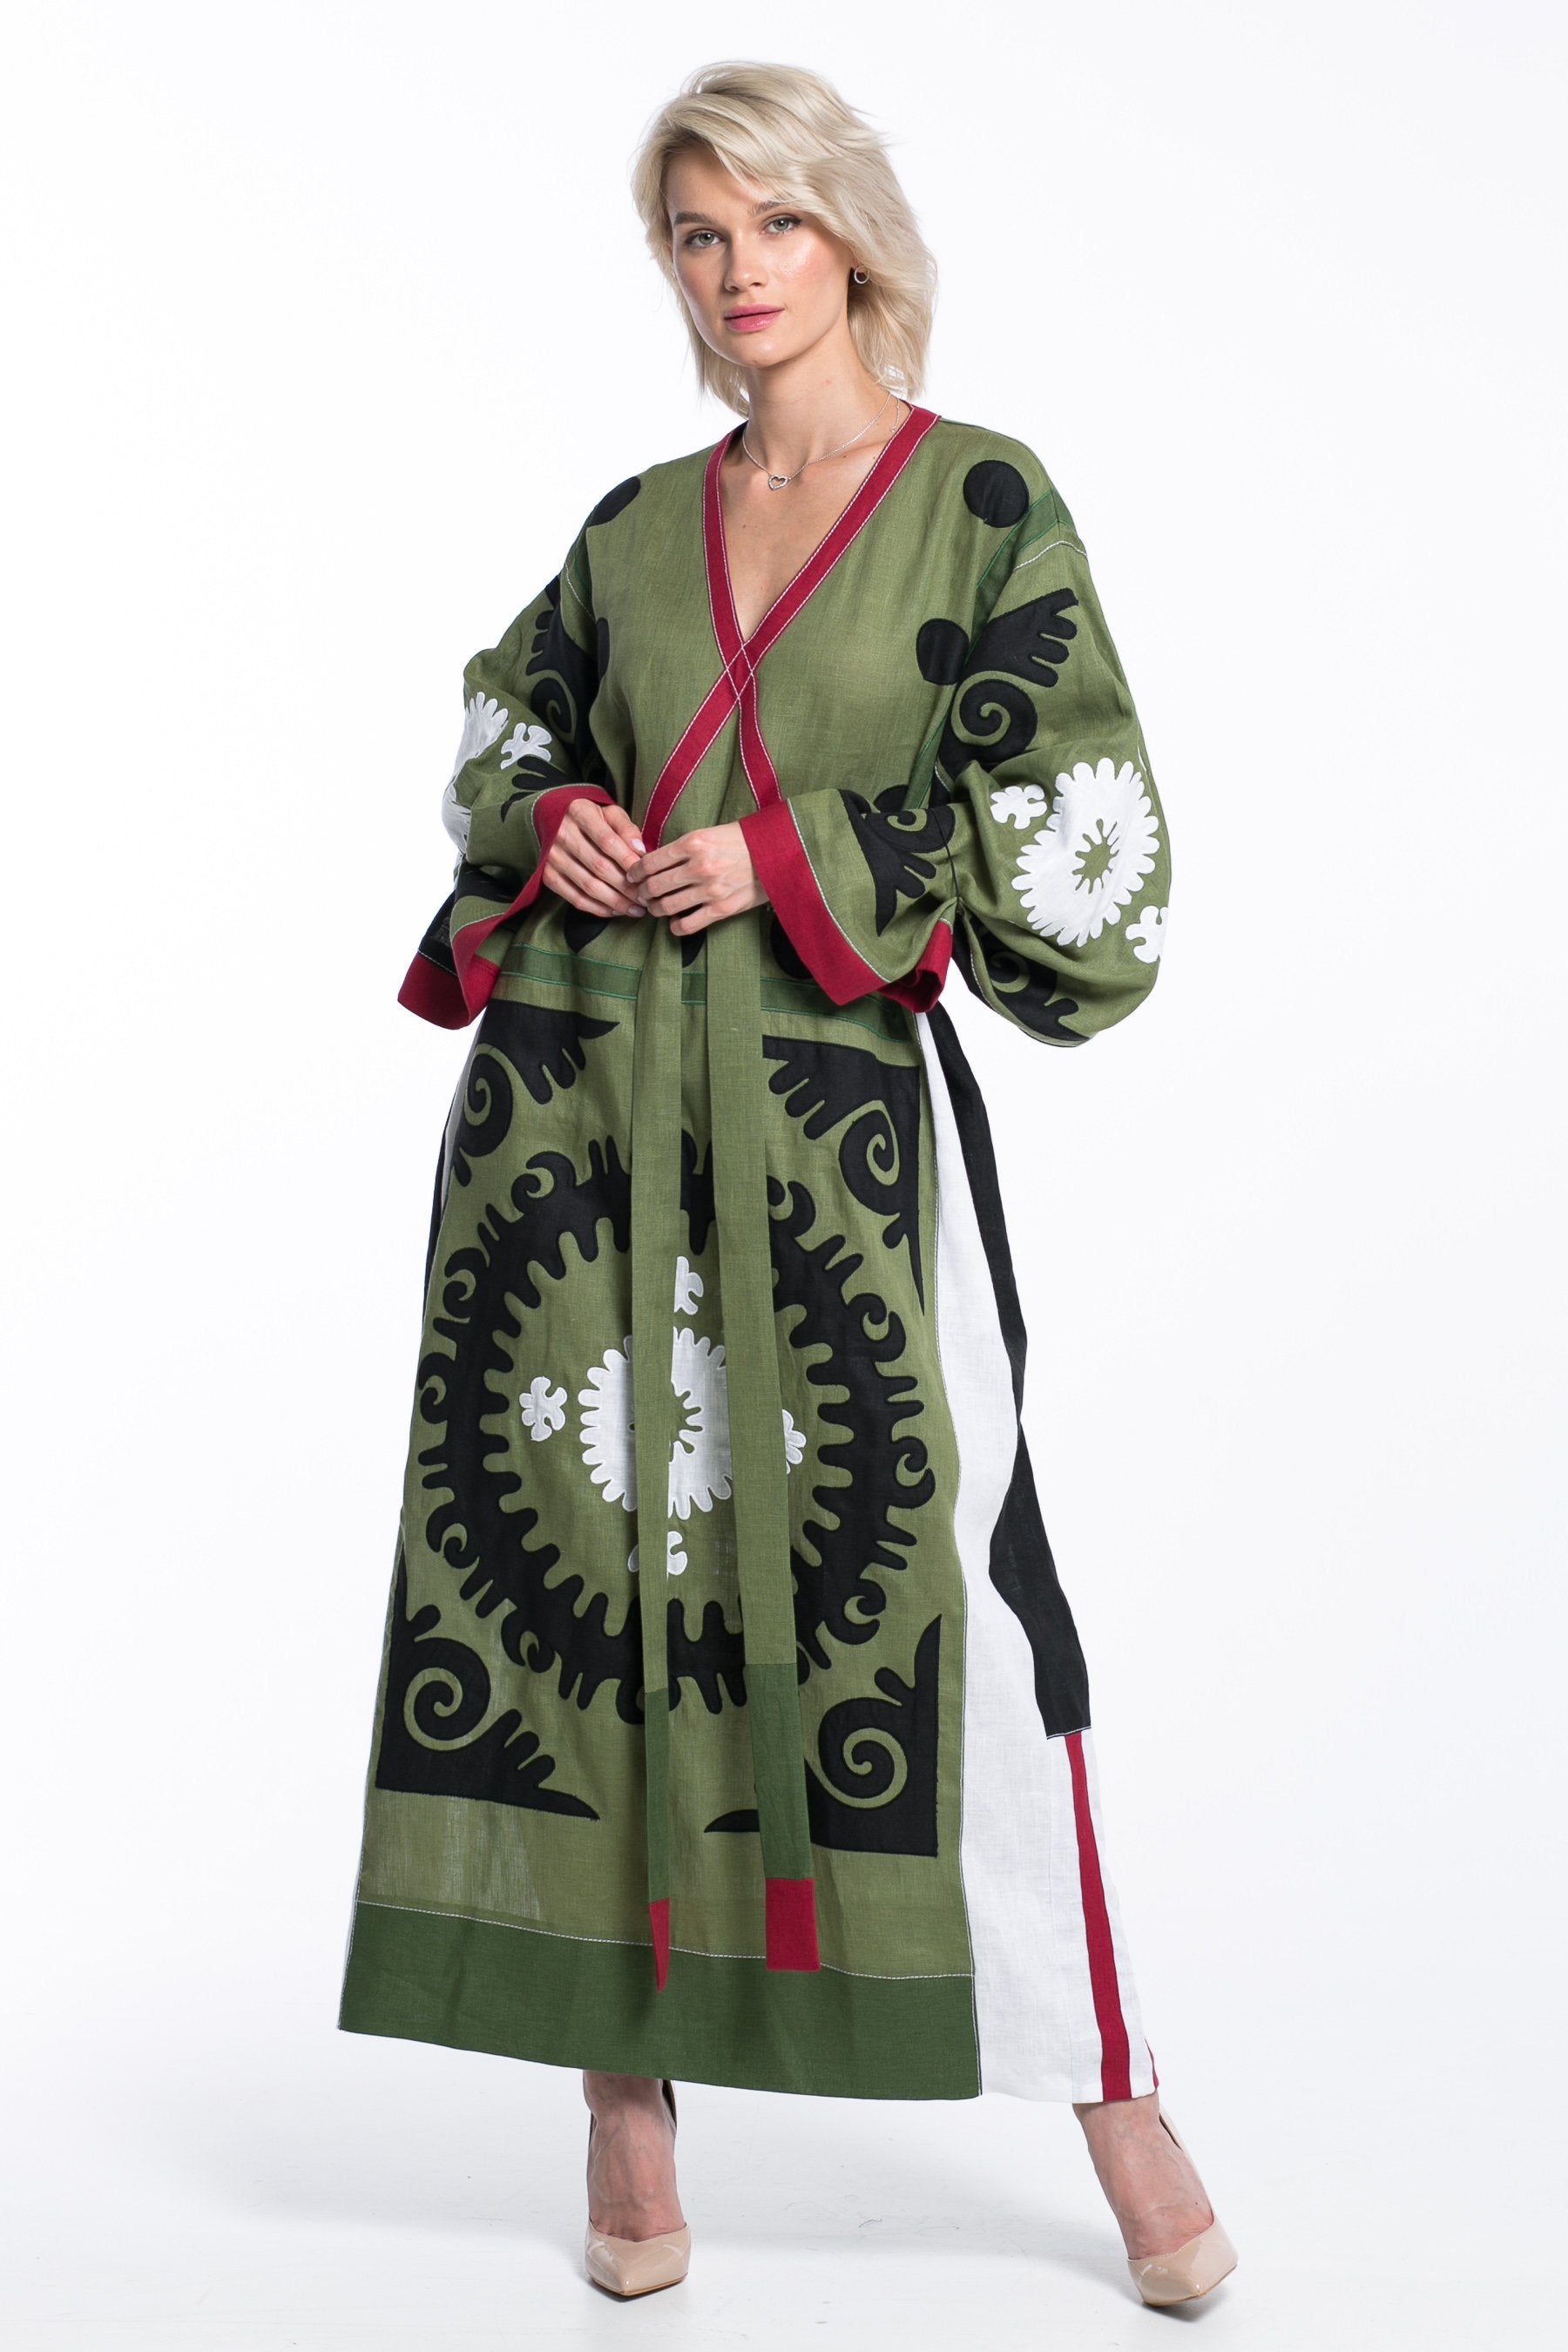 Negroni embroidered dress Applique boho kaftan with ethnic embroidery Fashion luxury linen clothing oversized